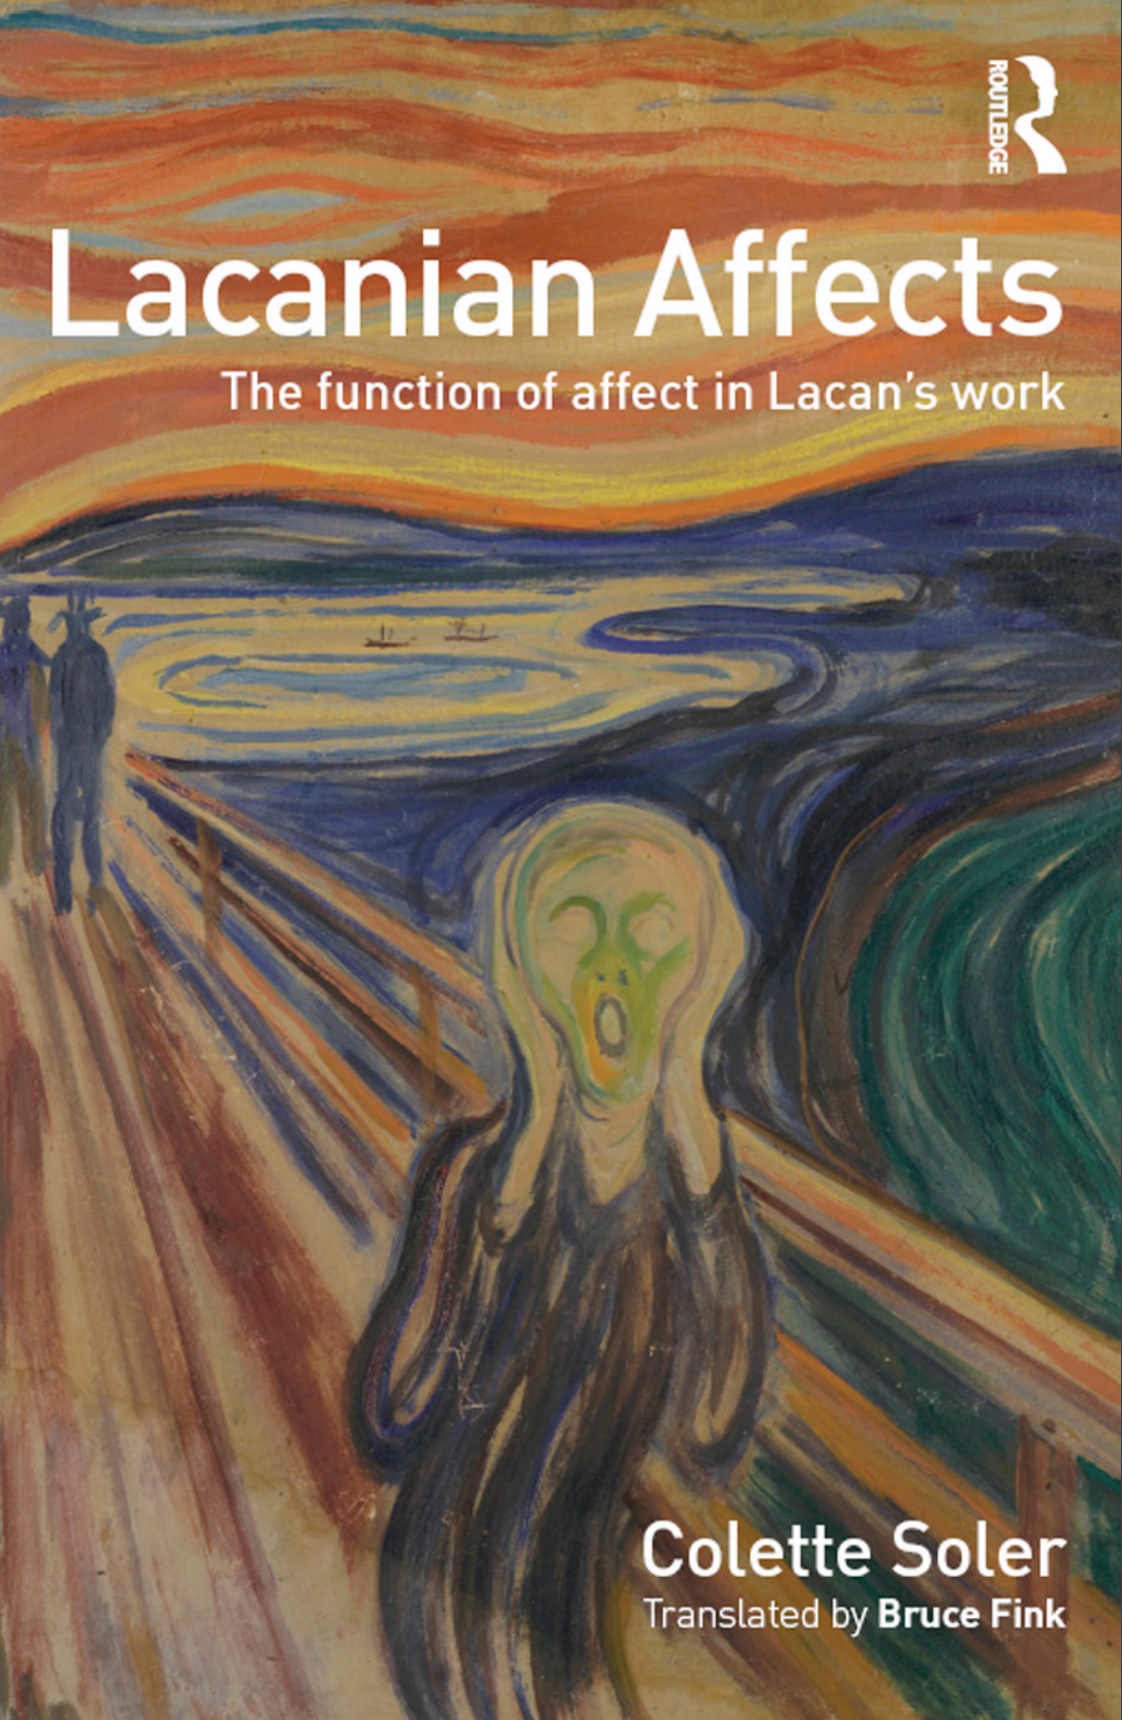 Lacanian-affects.jpg